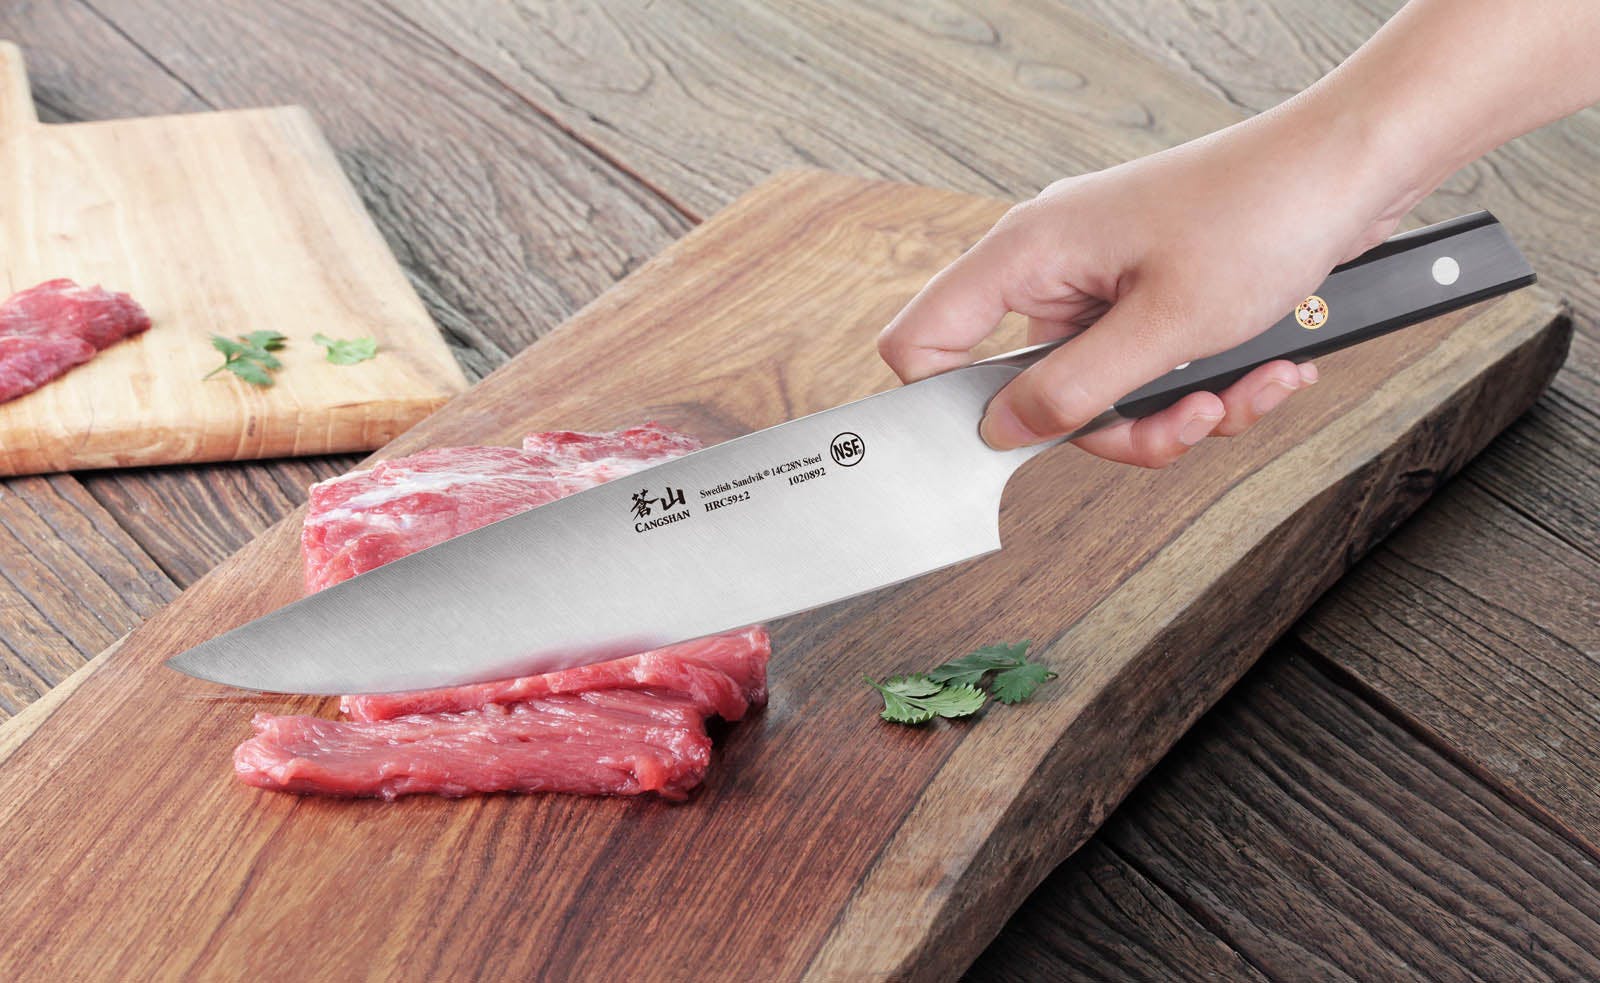 Cangshan TC Series 8" Chef Knife